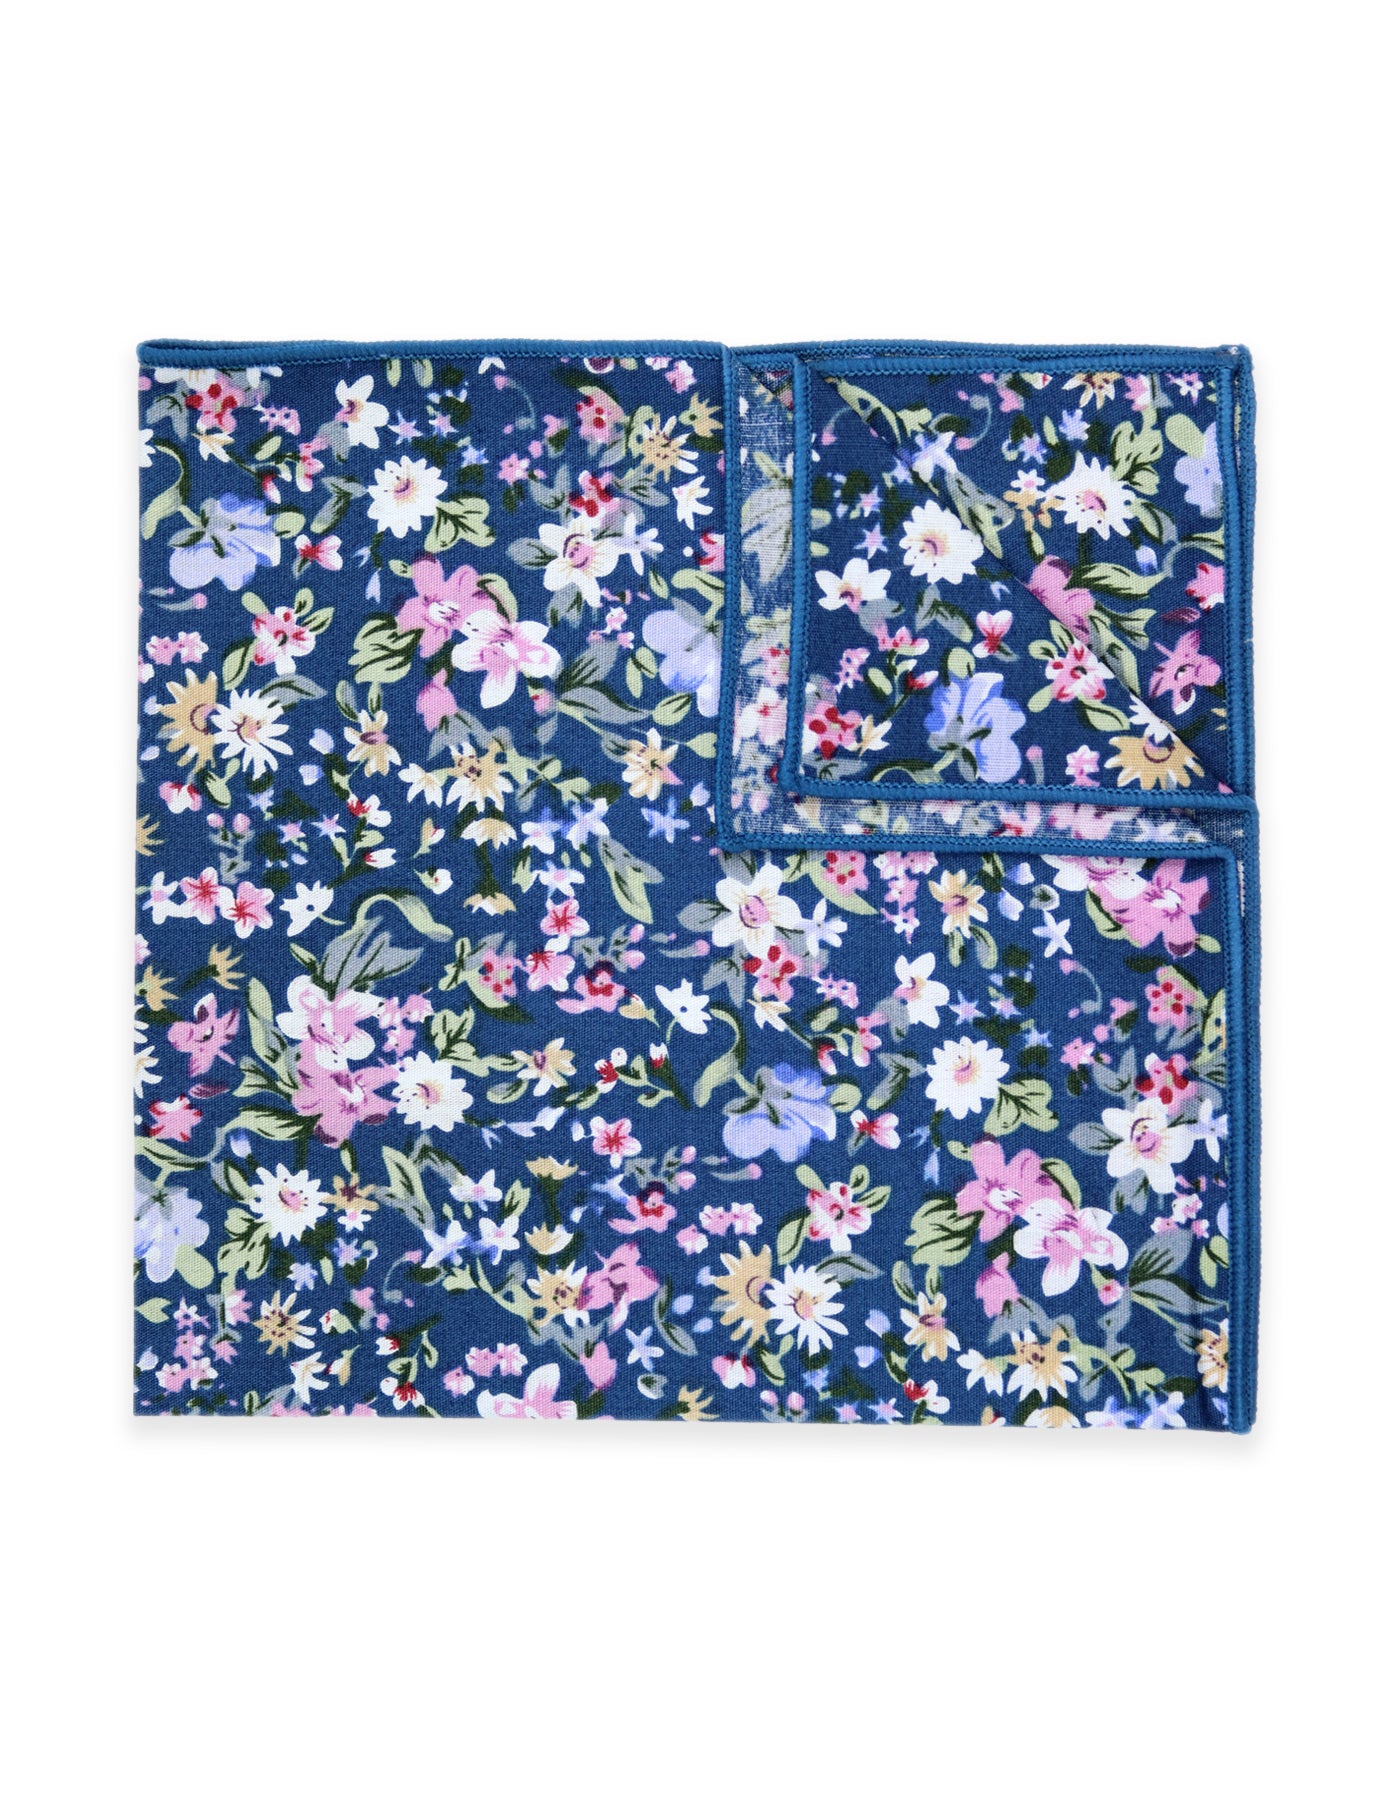 100% Cotton Floral Print Bow Tie - Blue & Pink